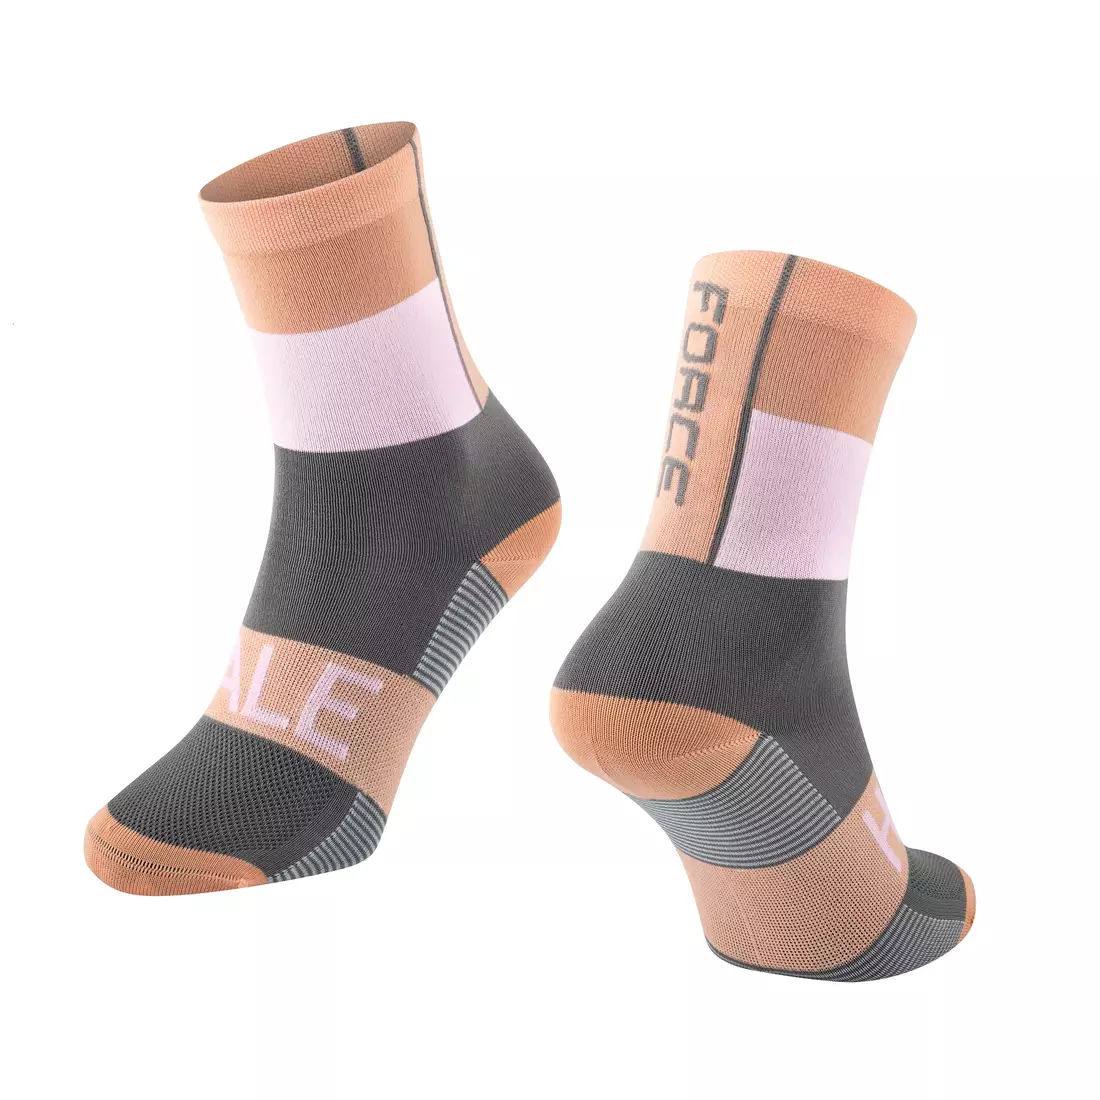 FORCE HALE cycling socks/sport socks, orange-white-gray